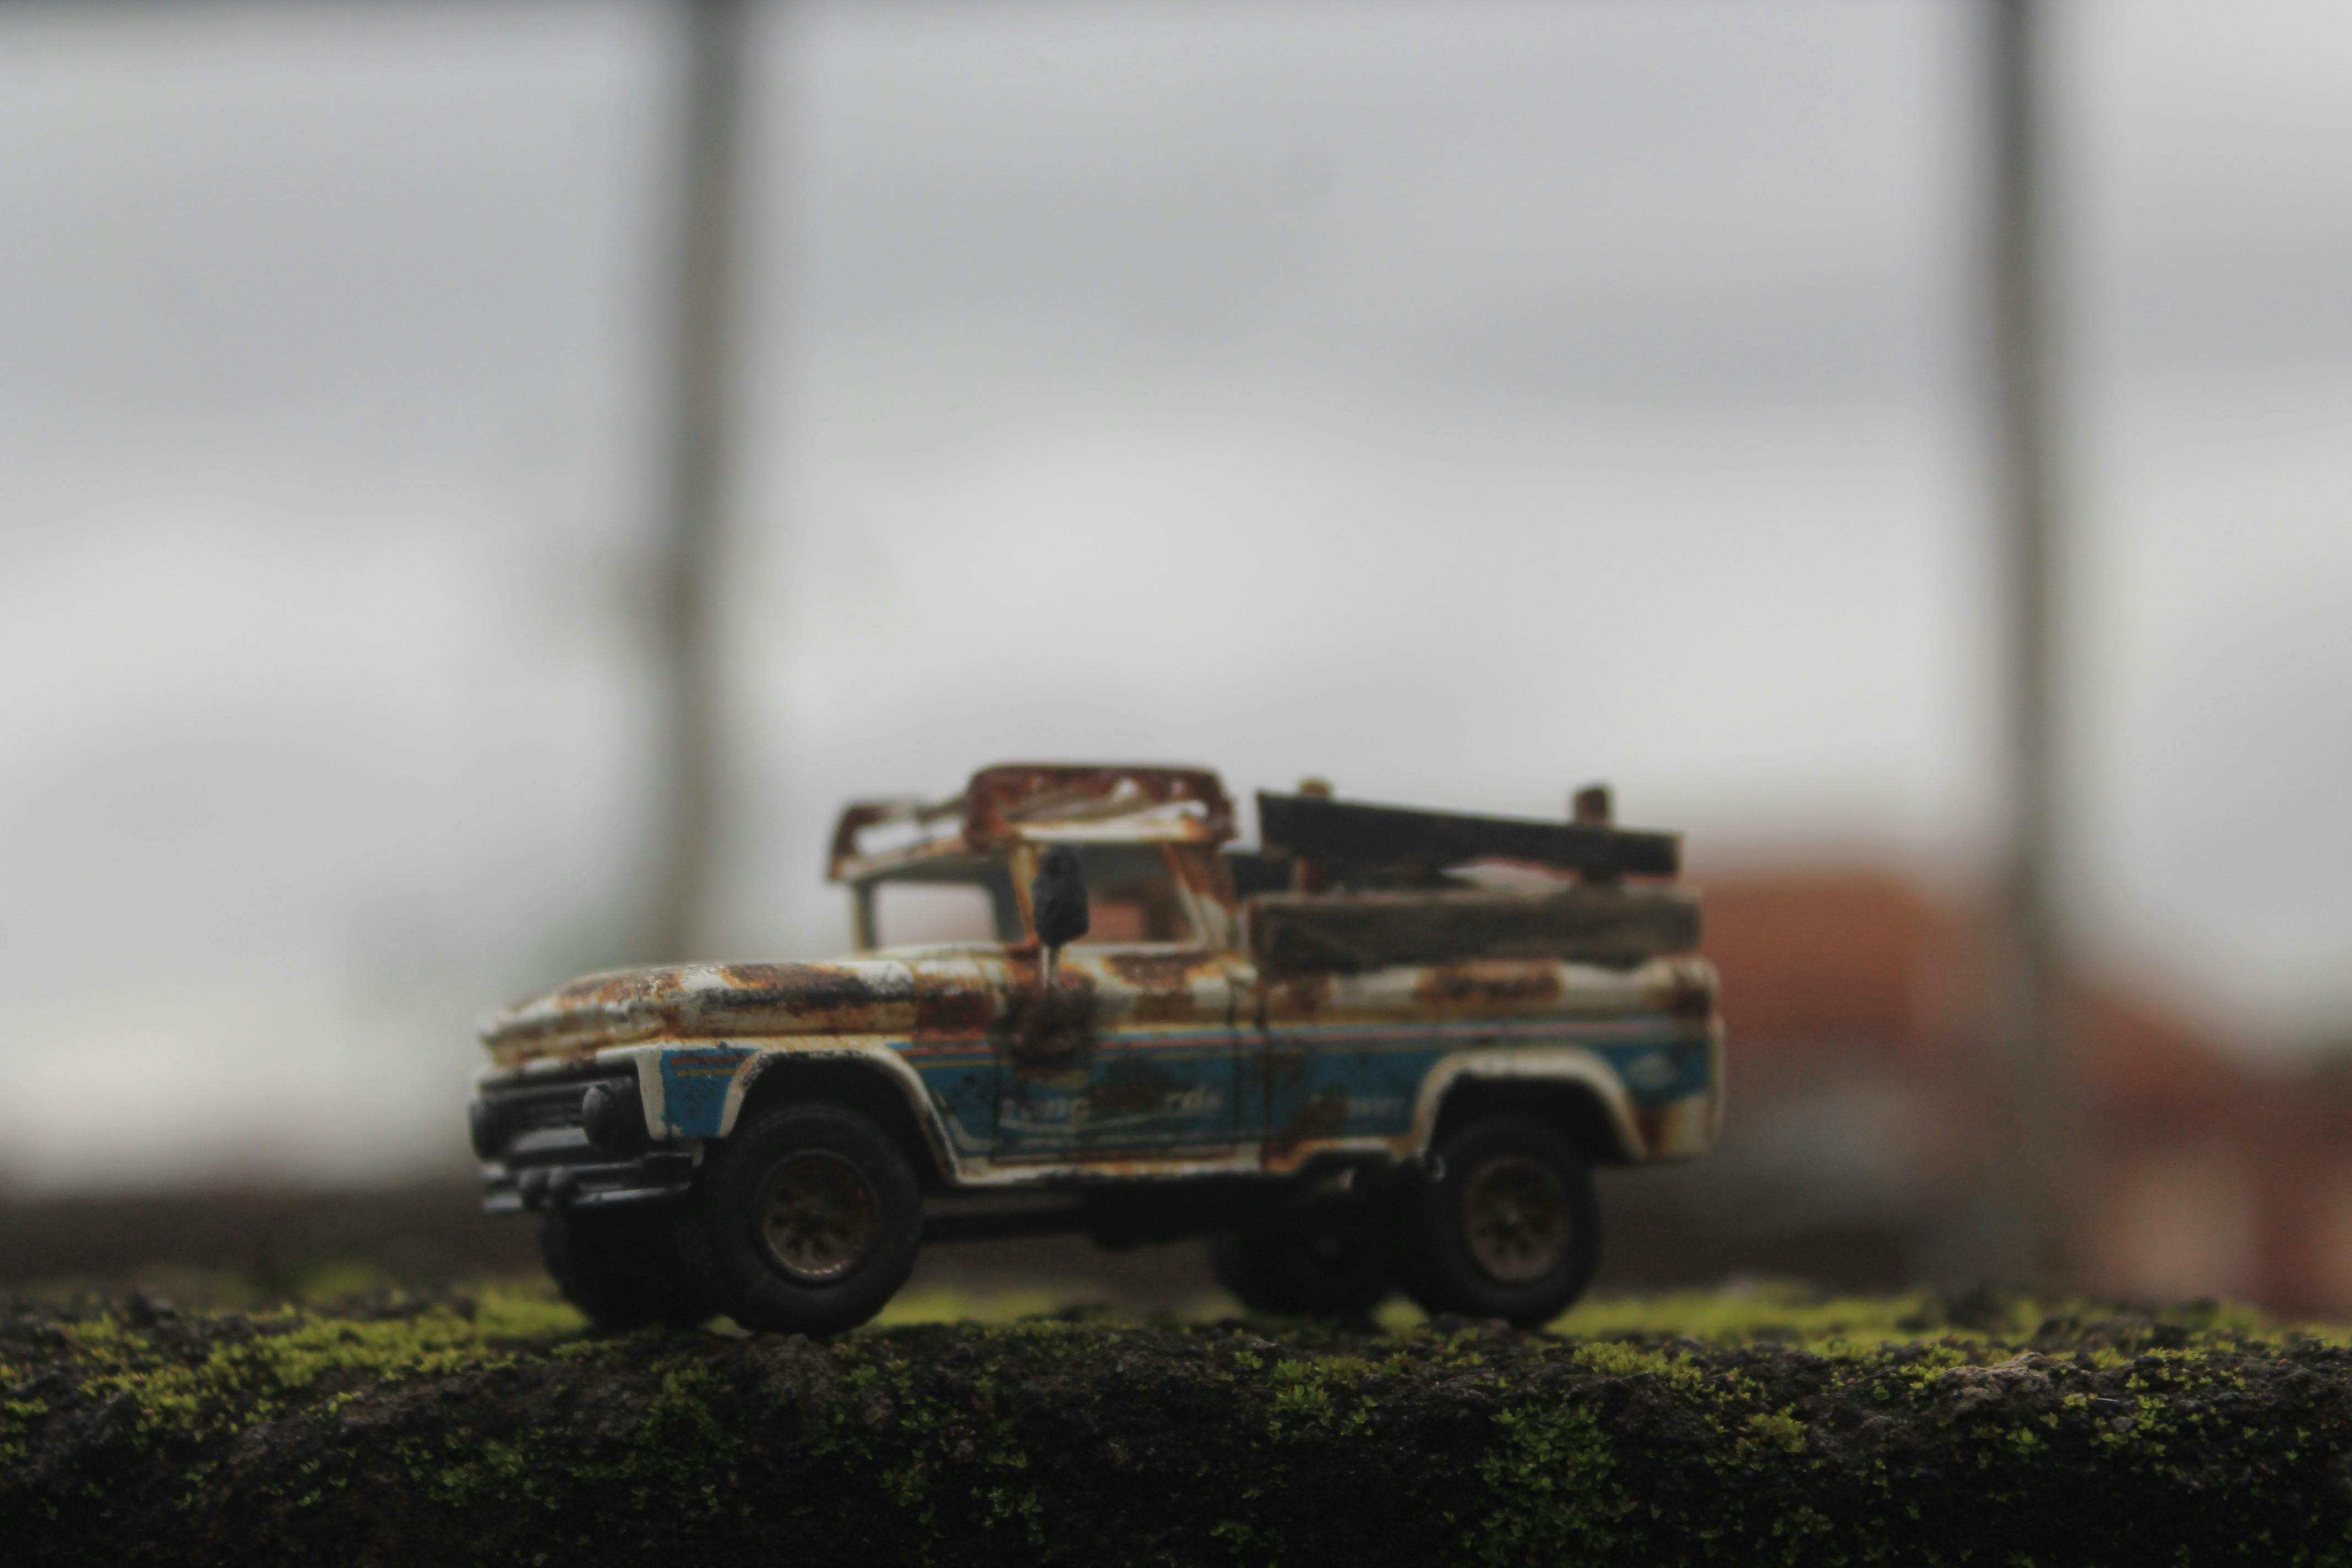 Free stock photo of #rusty #truck #diecast